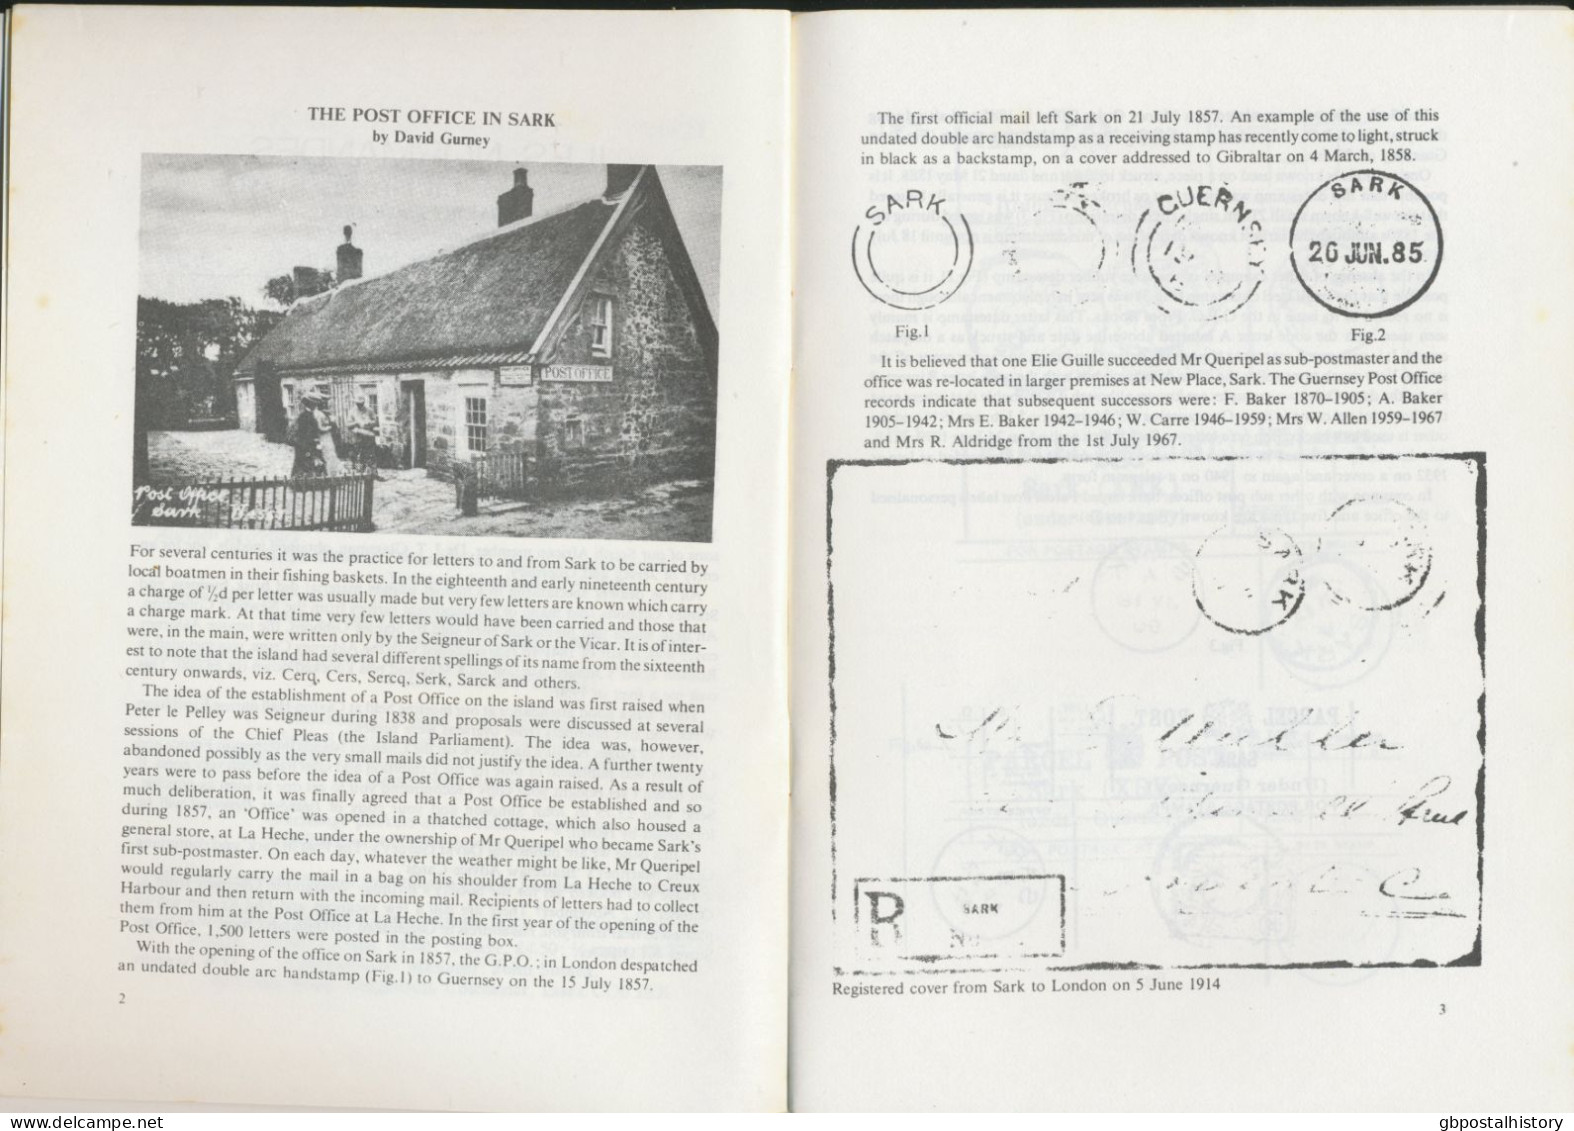 GB Channel Islands Specialists' Society Volume 3 No. 2 1980, 28p., The Post Office In Sark (13 Pages), Bradshaw Advice C - Filatelia E Historia De Correos